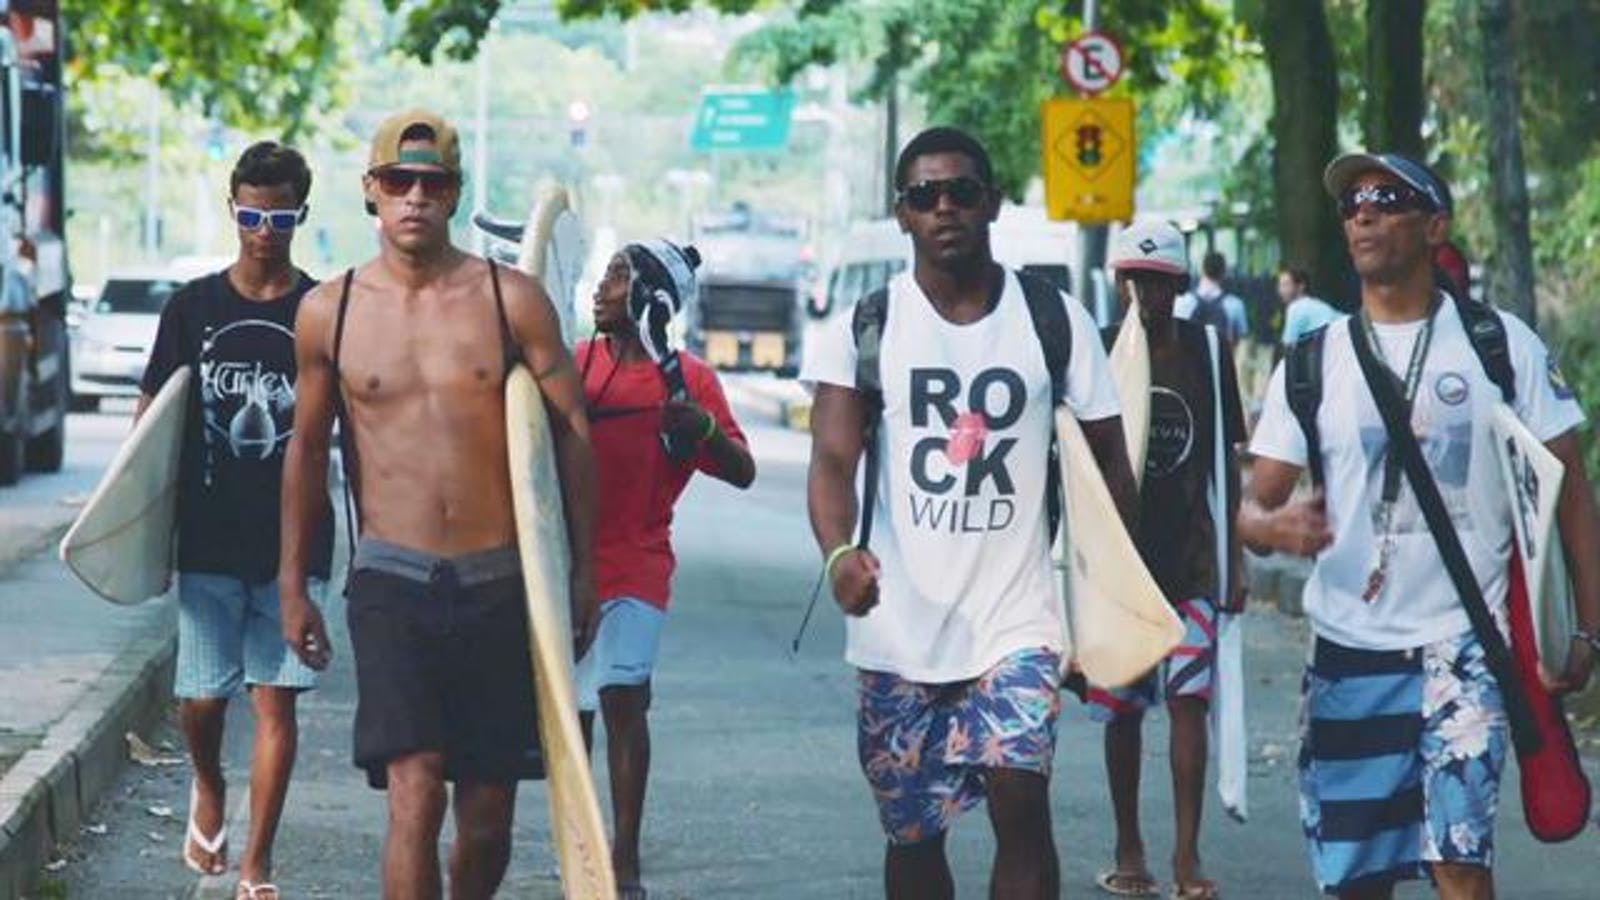 surfing in brazil